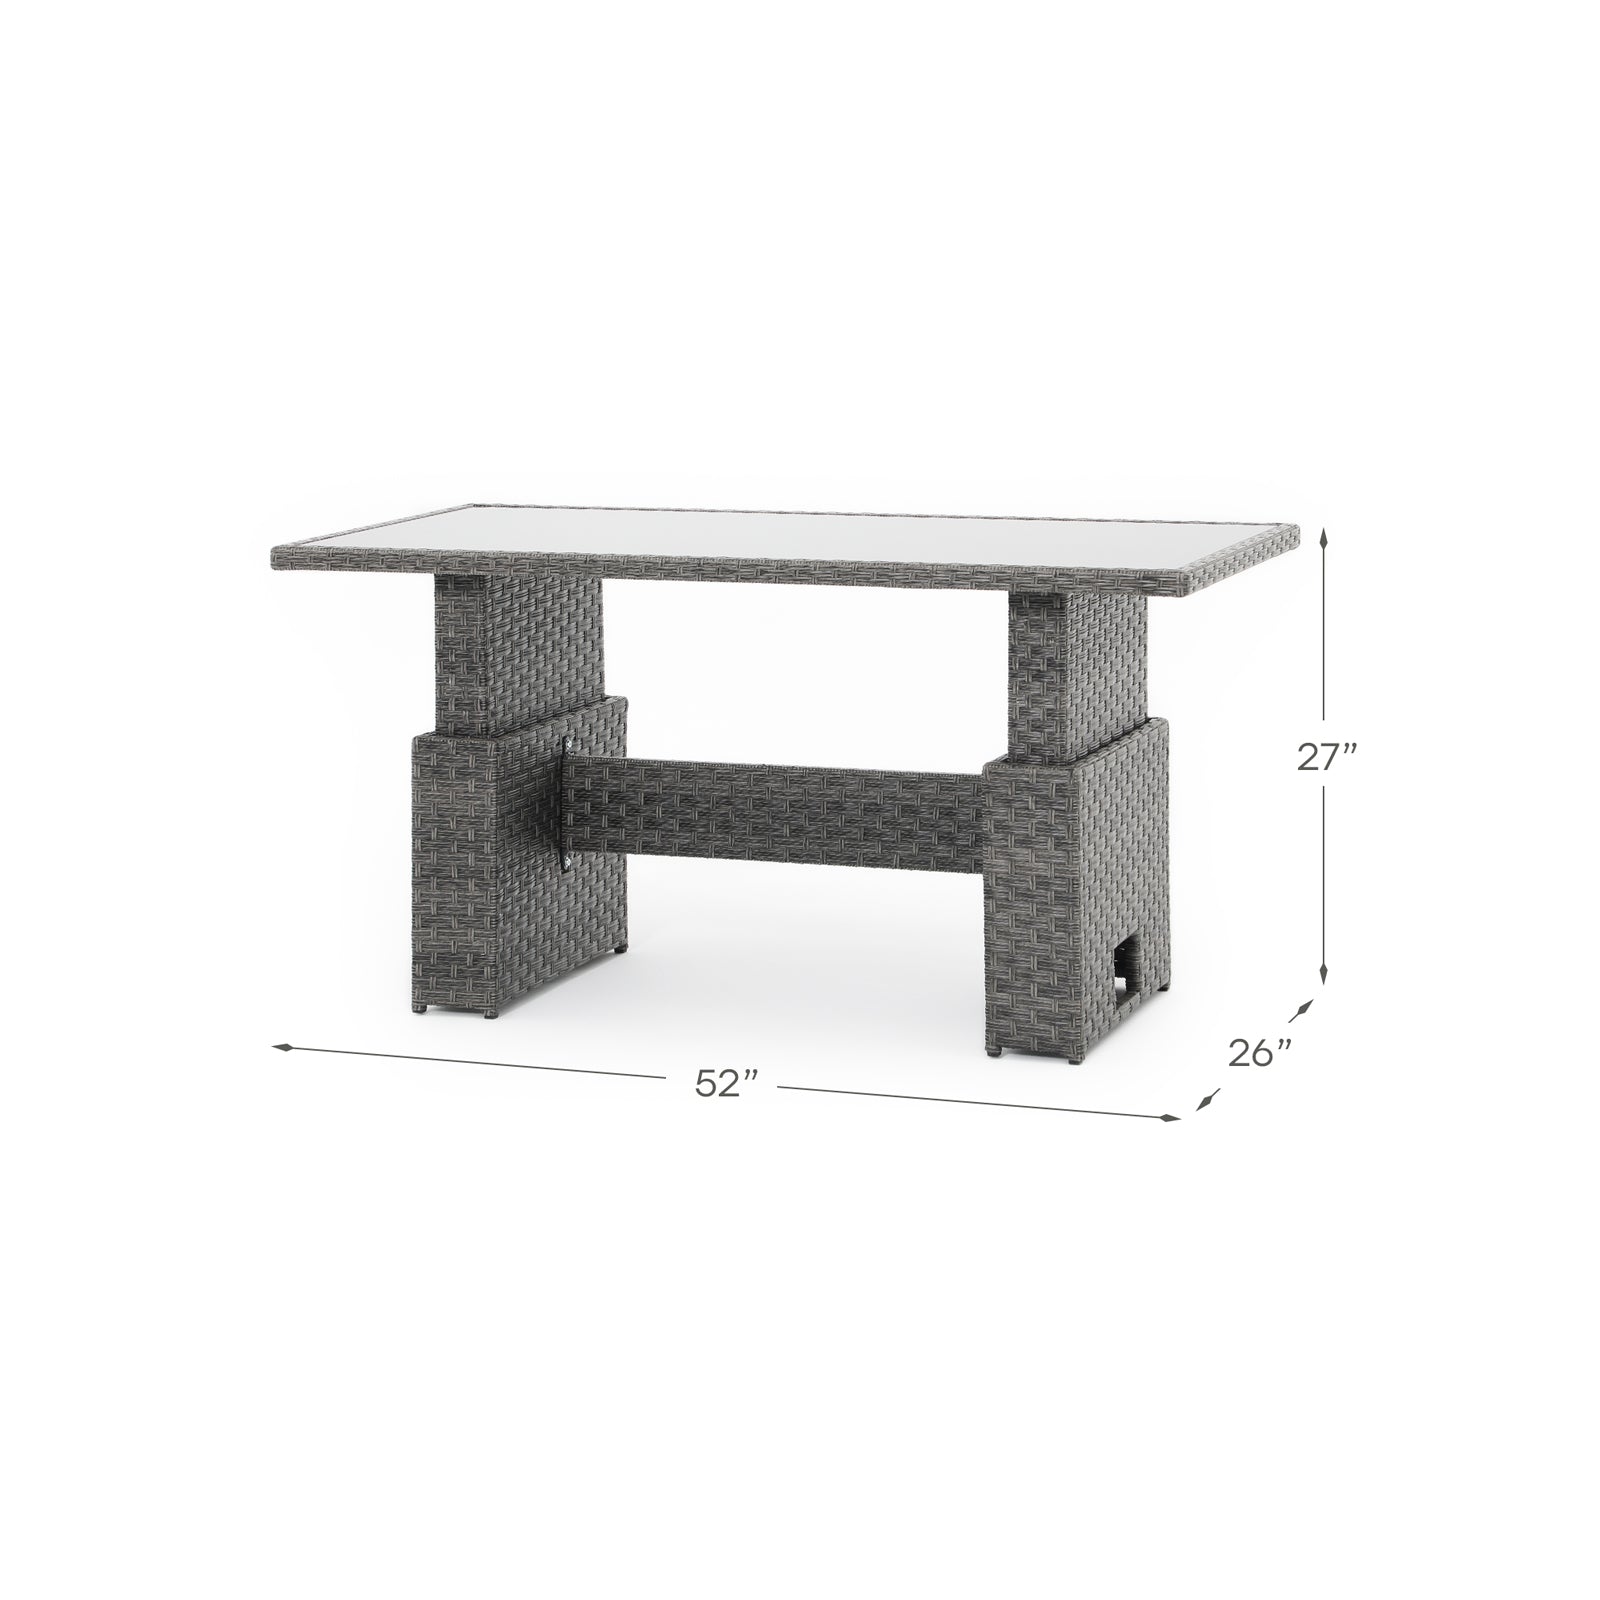 Ayia grey dining table, grey rattan, tempered glass dimension information - Jardina Furniture